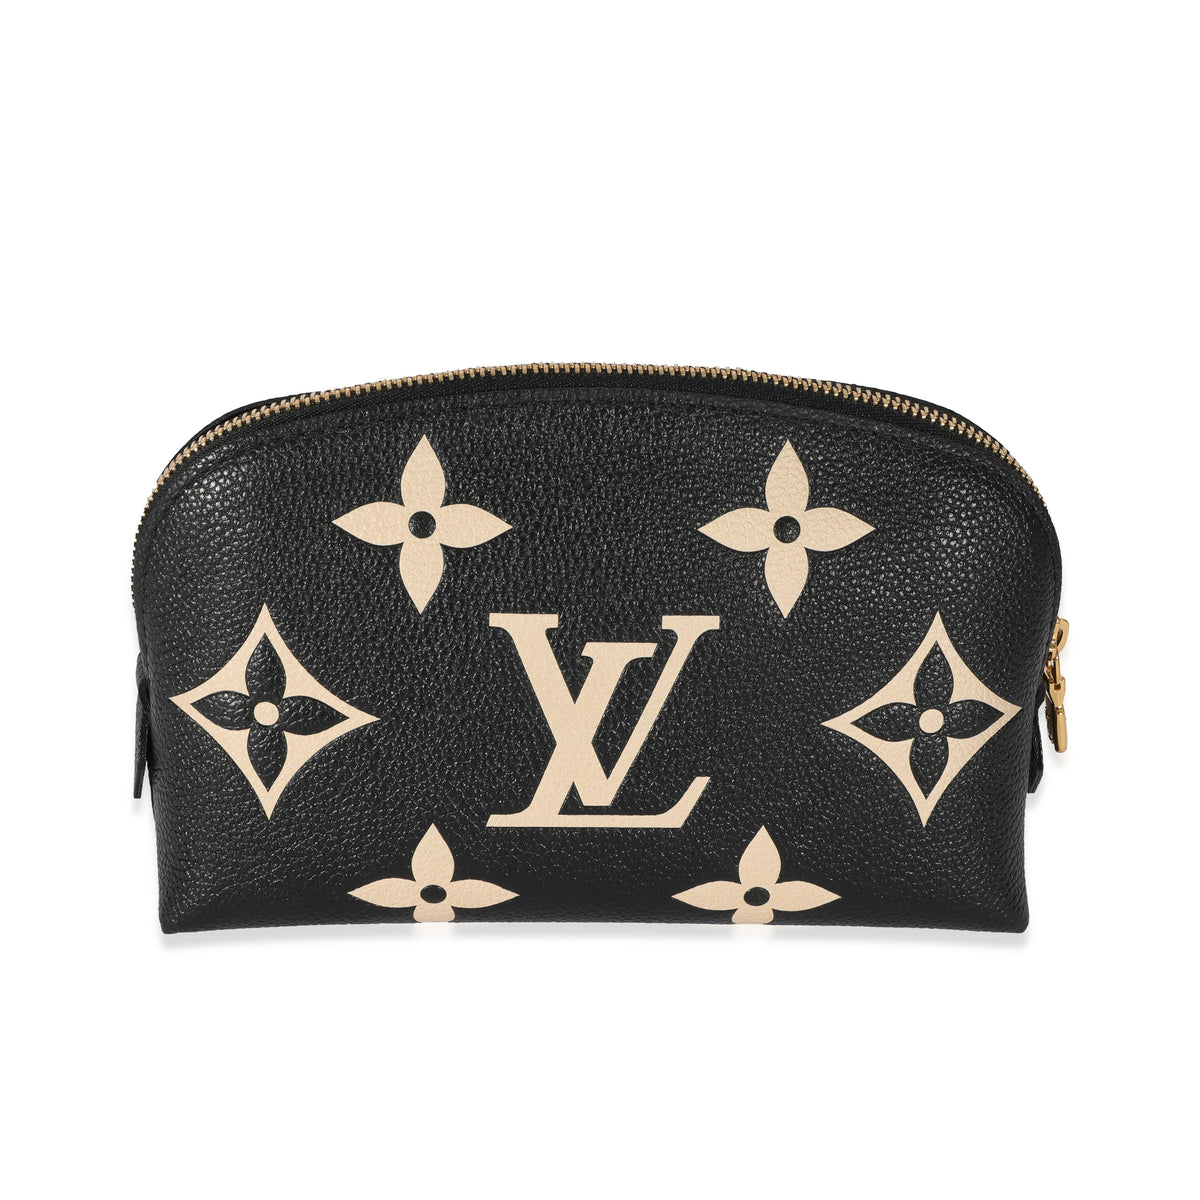 White LEATHER Louis Vuitton Vanity bag, Size: Medium